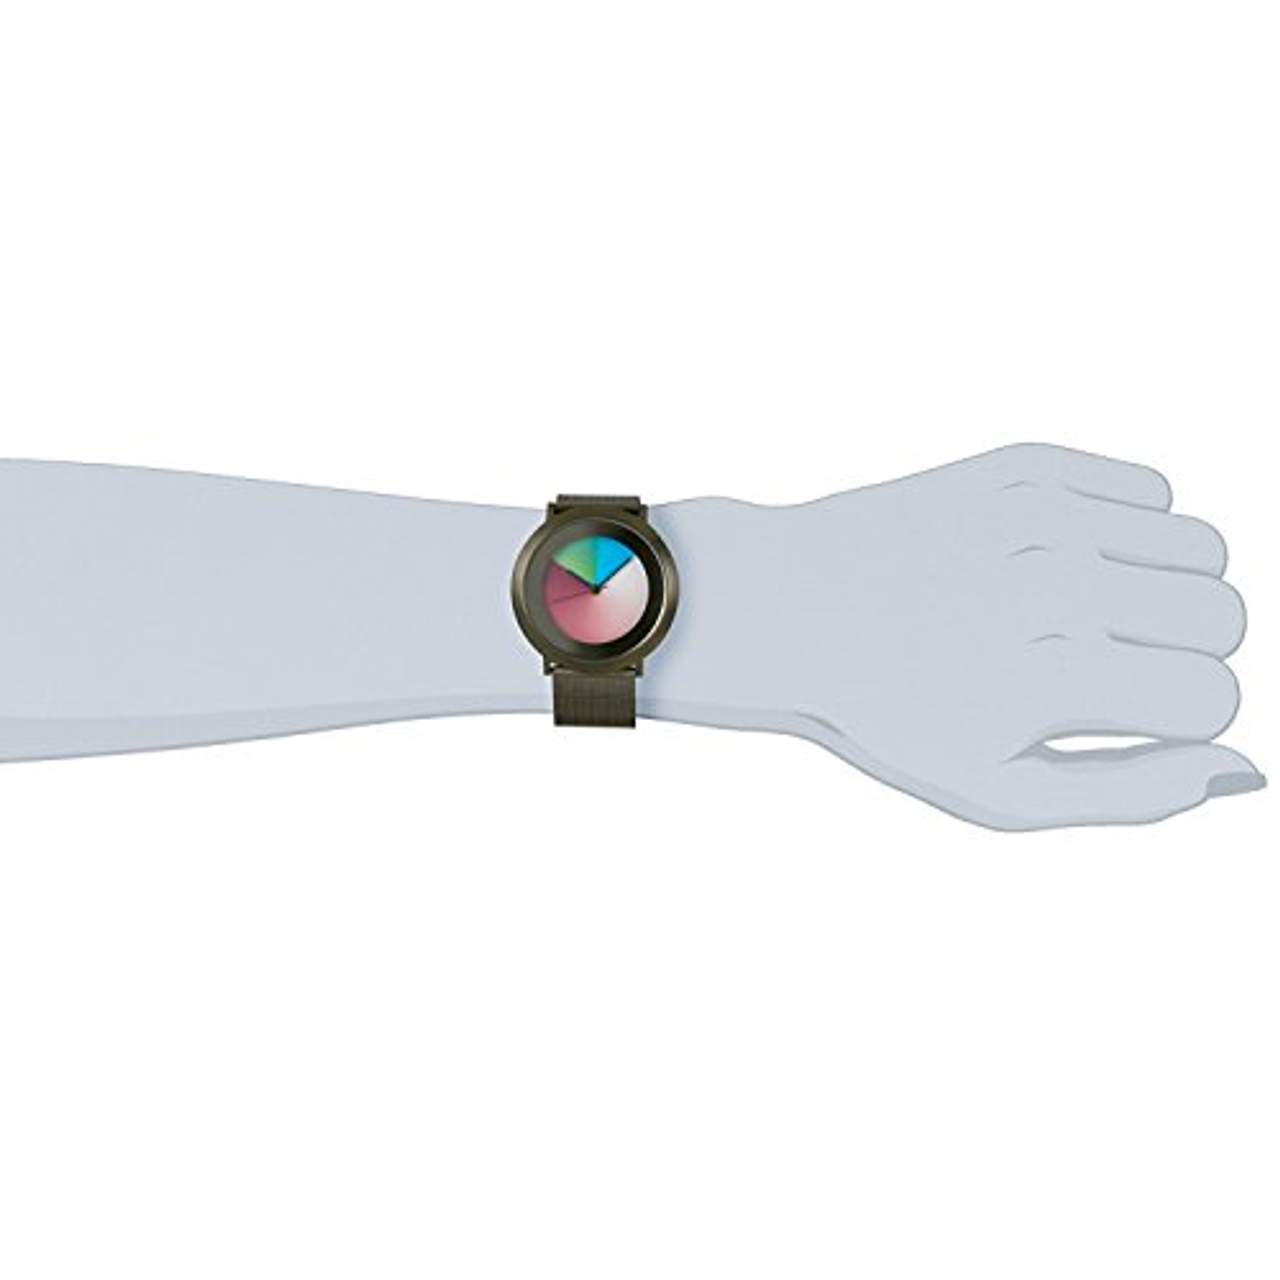 Colour Inspiration Unisex-Armbanduhr Analog Edelstahl beschichtet 2014M005